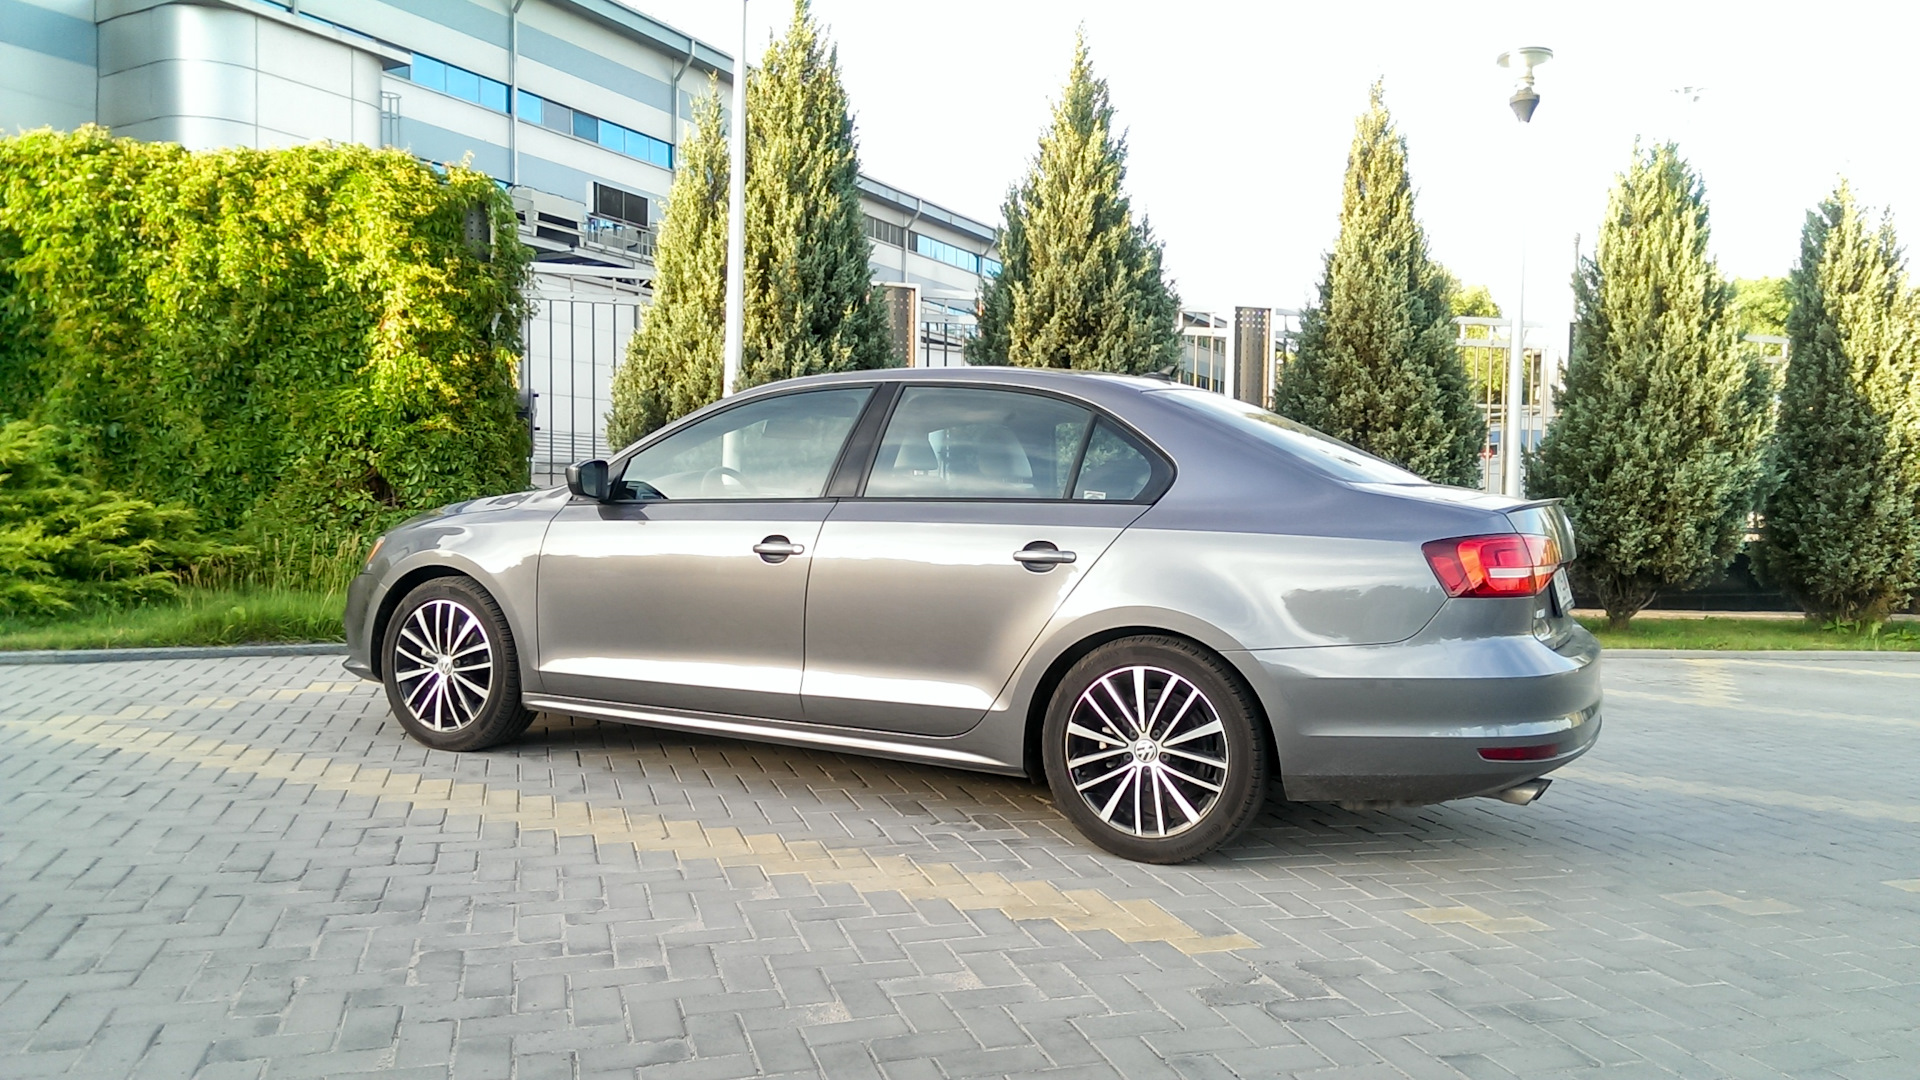 Volkswagen 1.8 t. Фольксваген Джетта 8. Jetta 2014 1.8. Фольксваген Джетта 1.8. Фольксваген Джетта 2014 1.8 TSI.